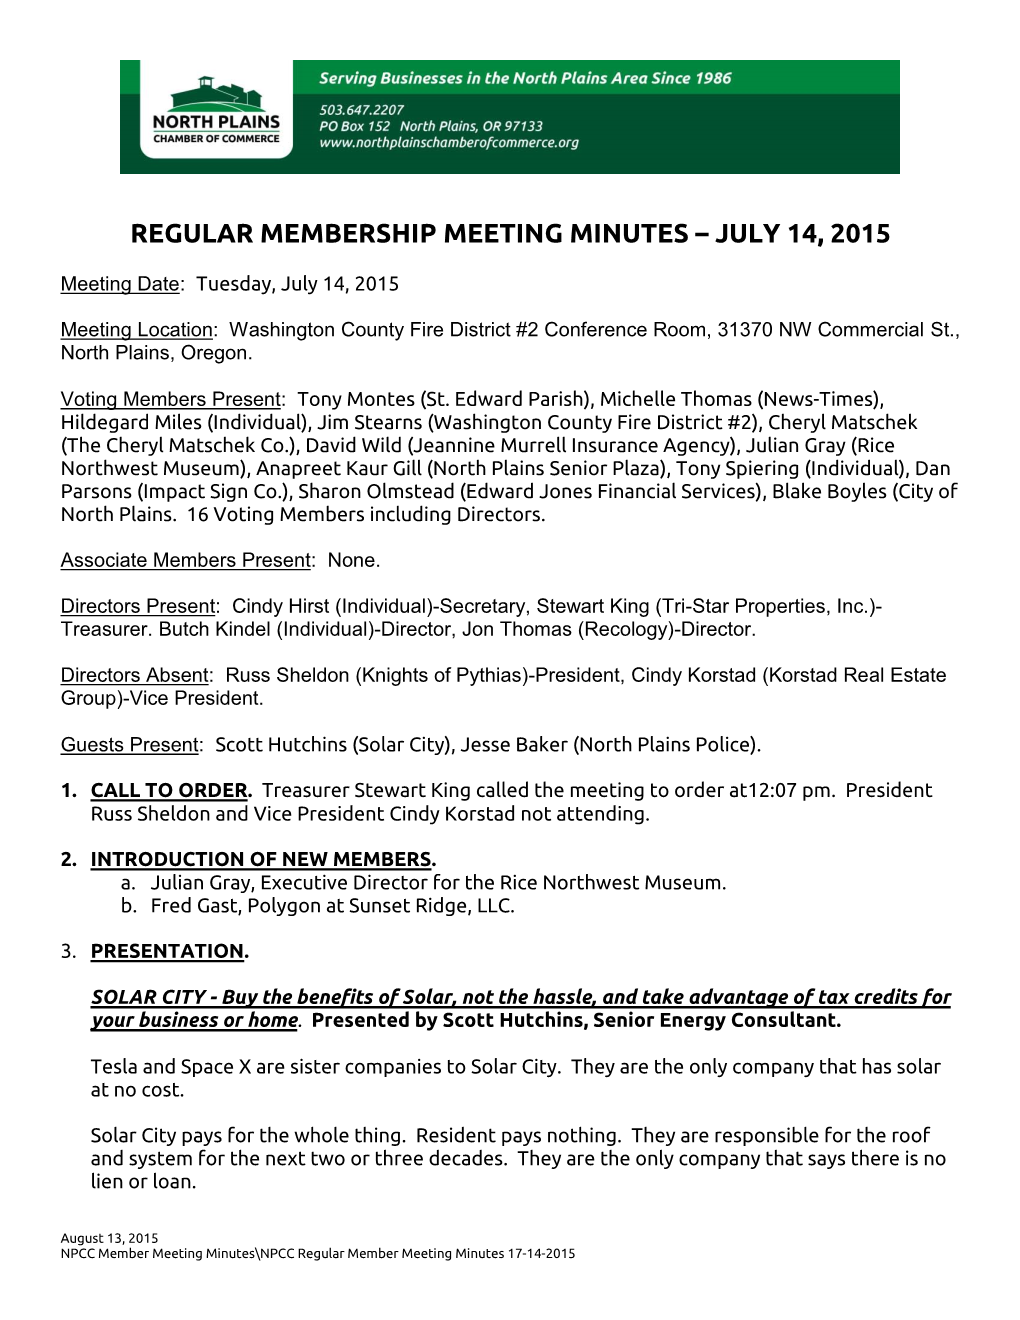 Regular Membership Meeting Minutes – July 14, 2015